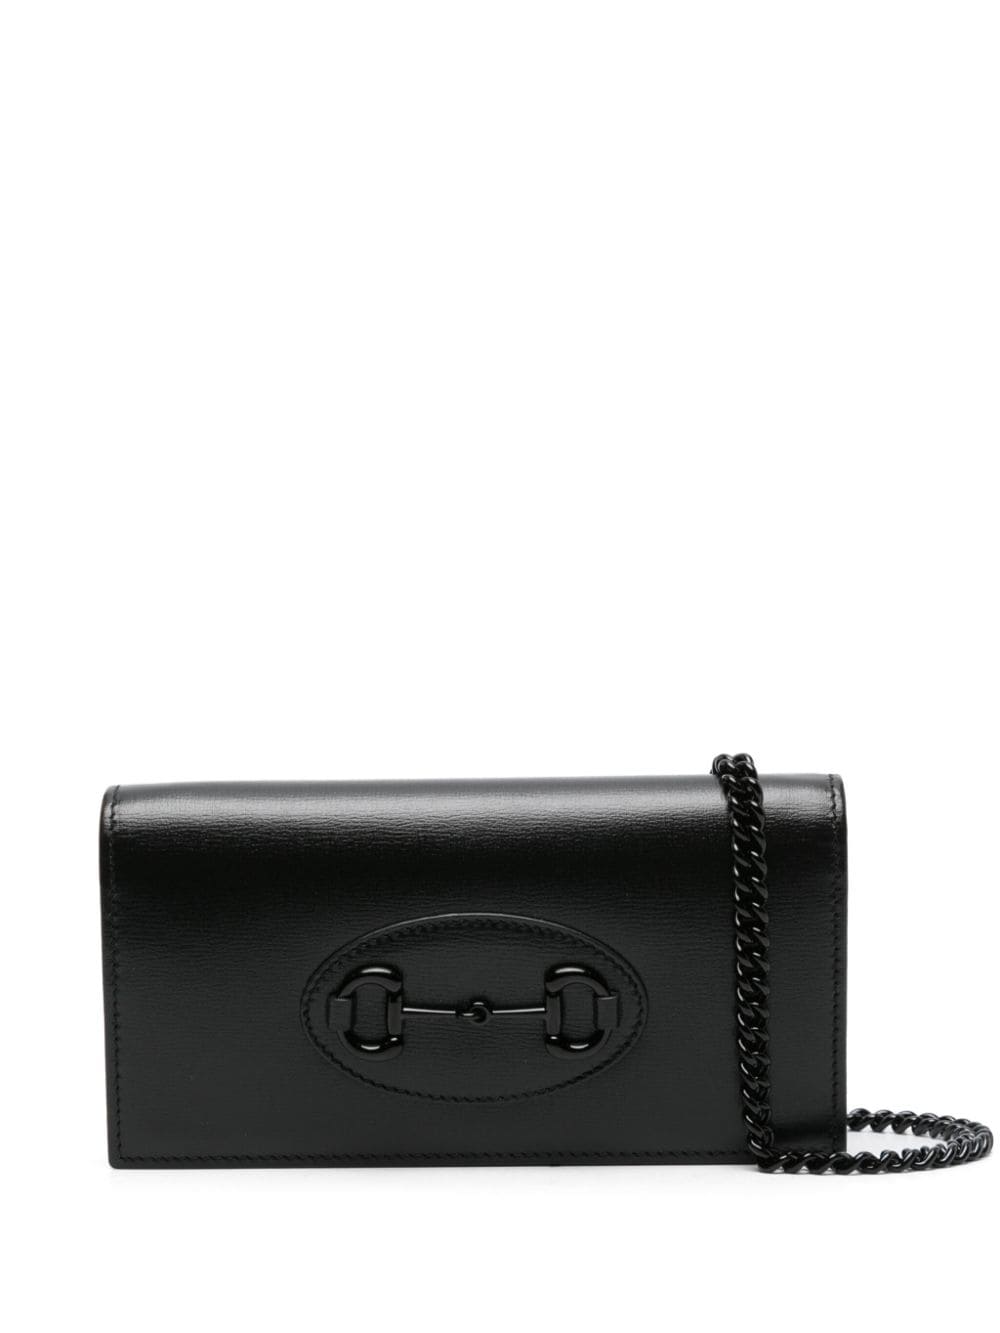 Gucci Horsebit 1955 chain-link wallet - Black von Gucci